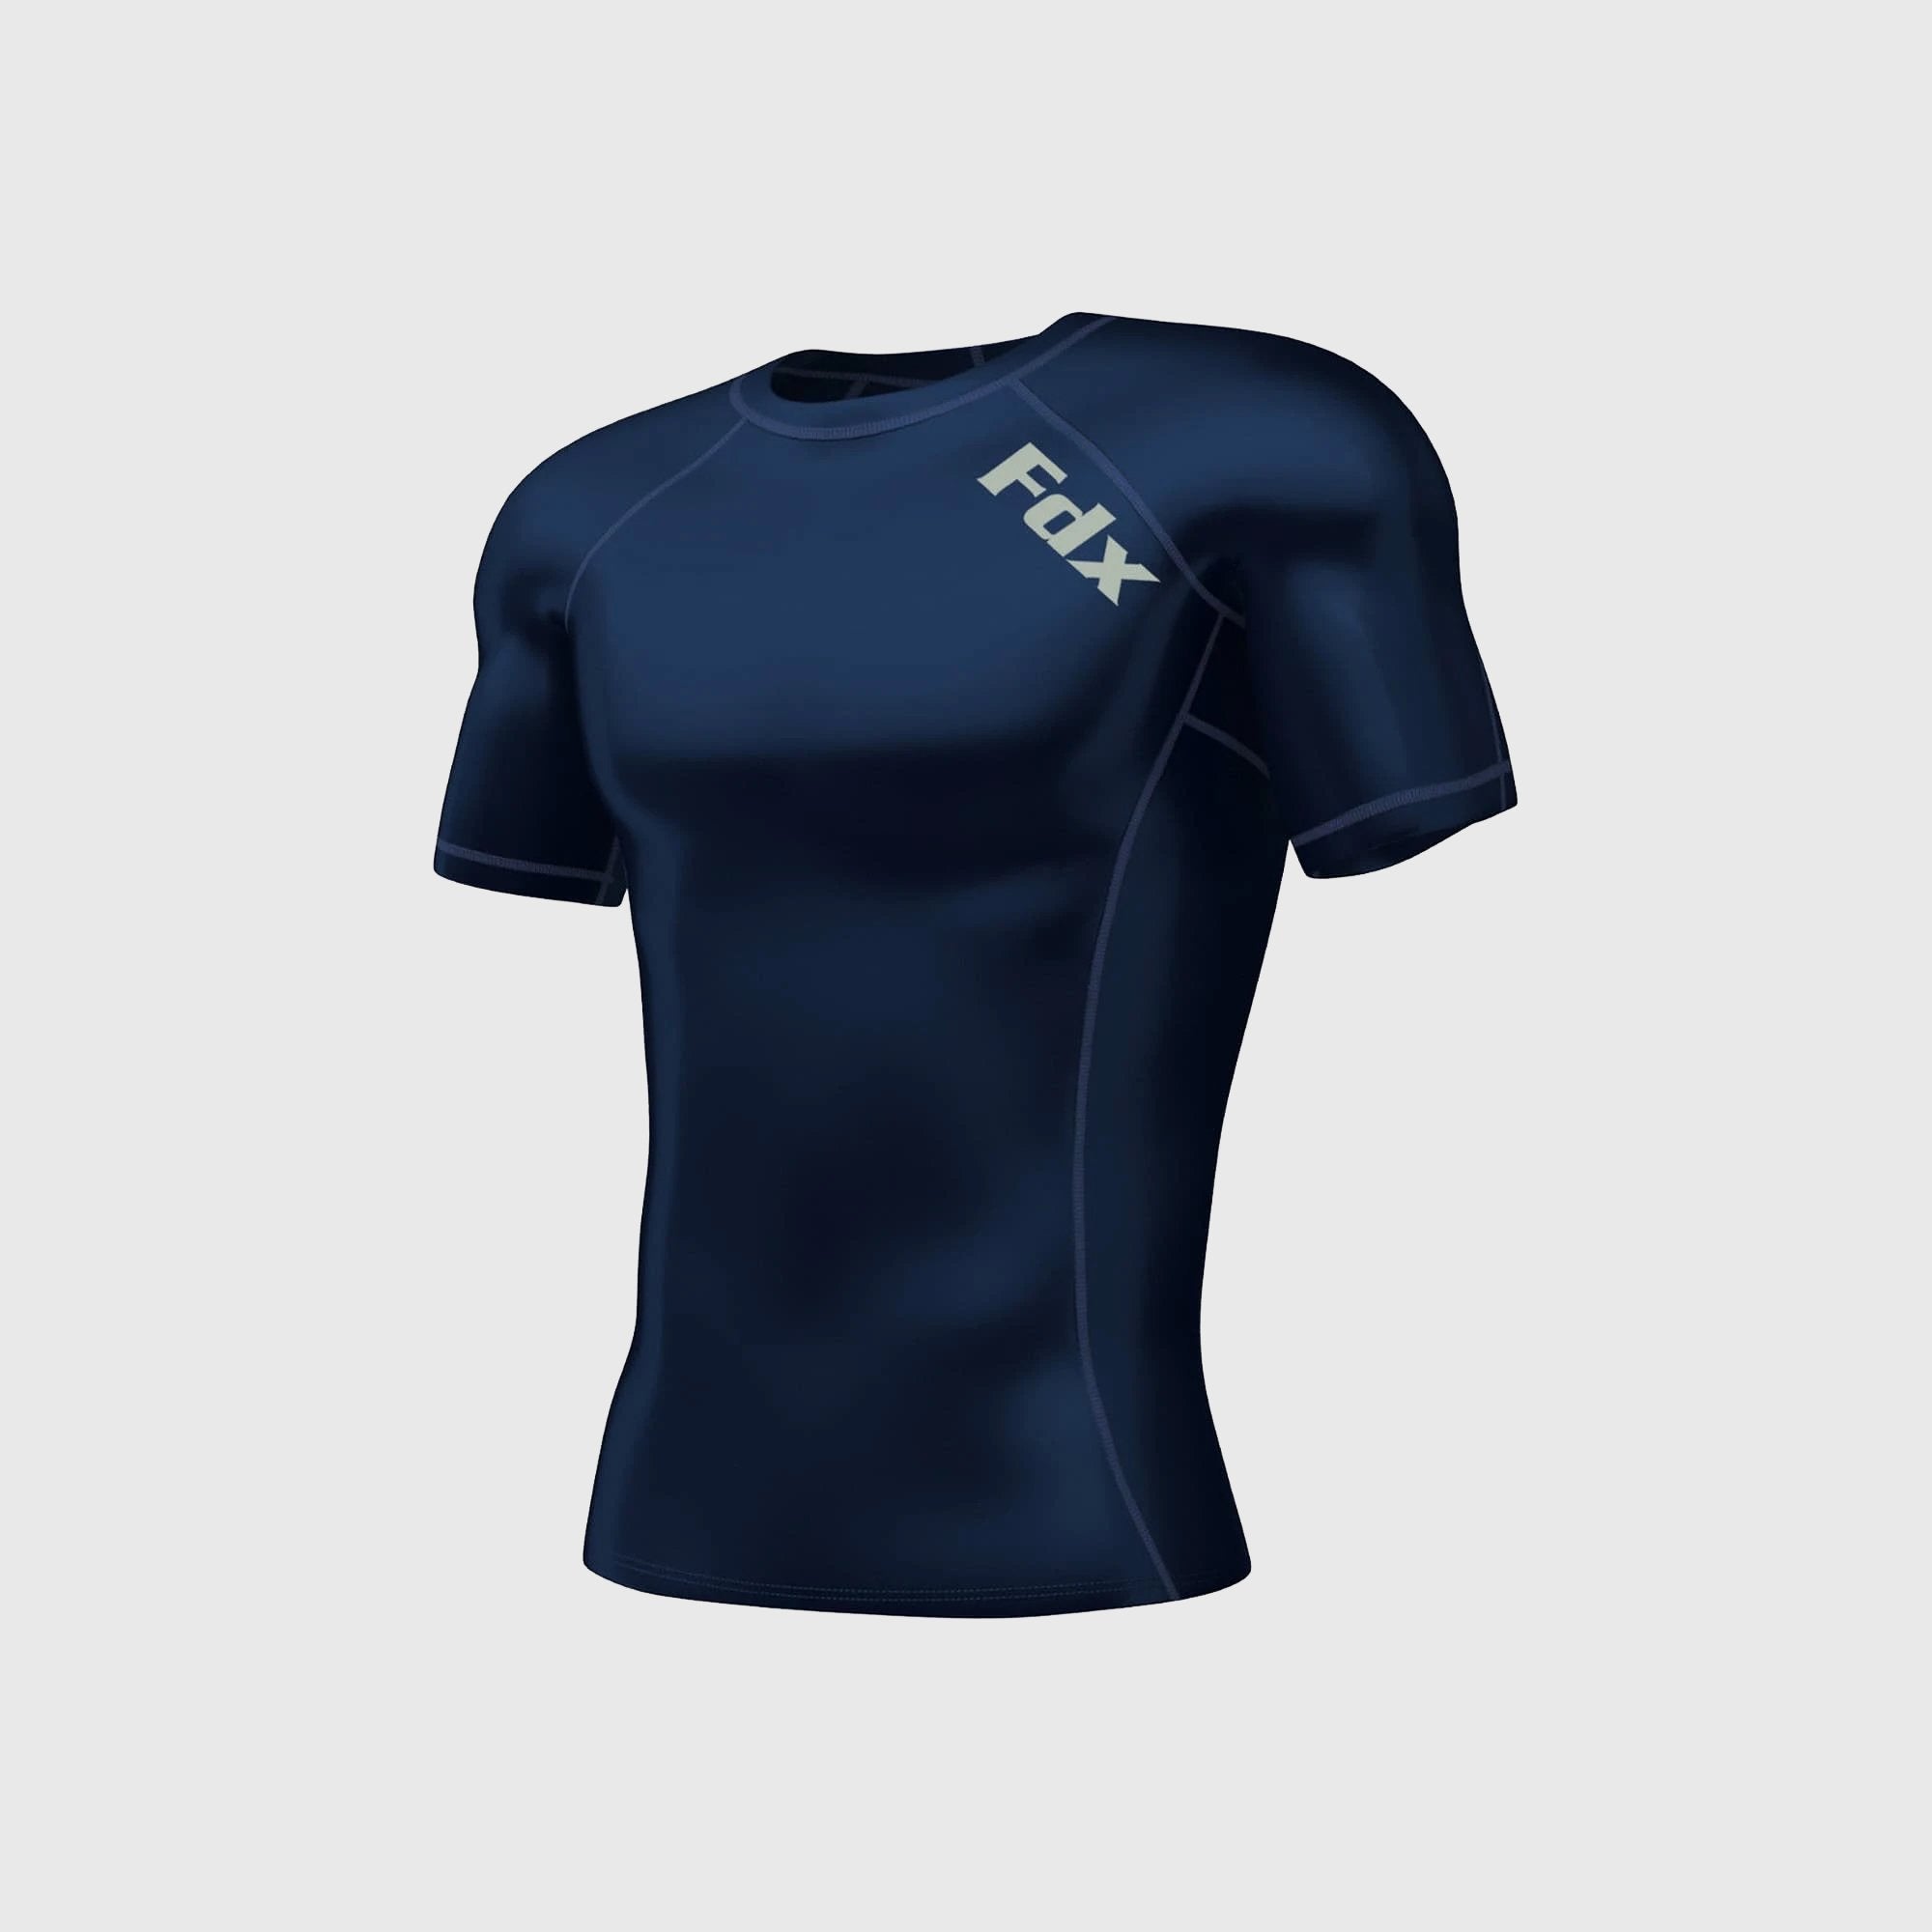 Fdx Cosmic Navy Blue Men's Short Sleeve Base Layer Gym Shirt